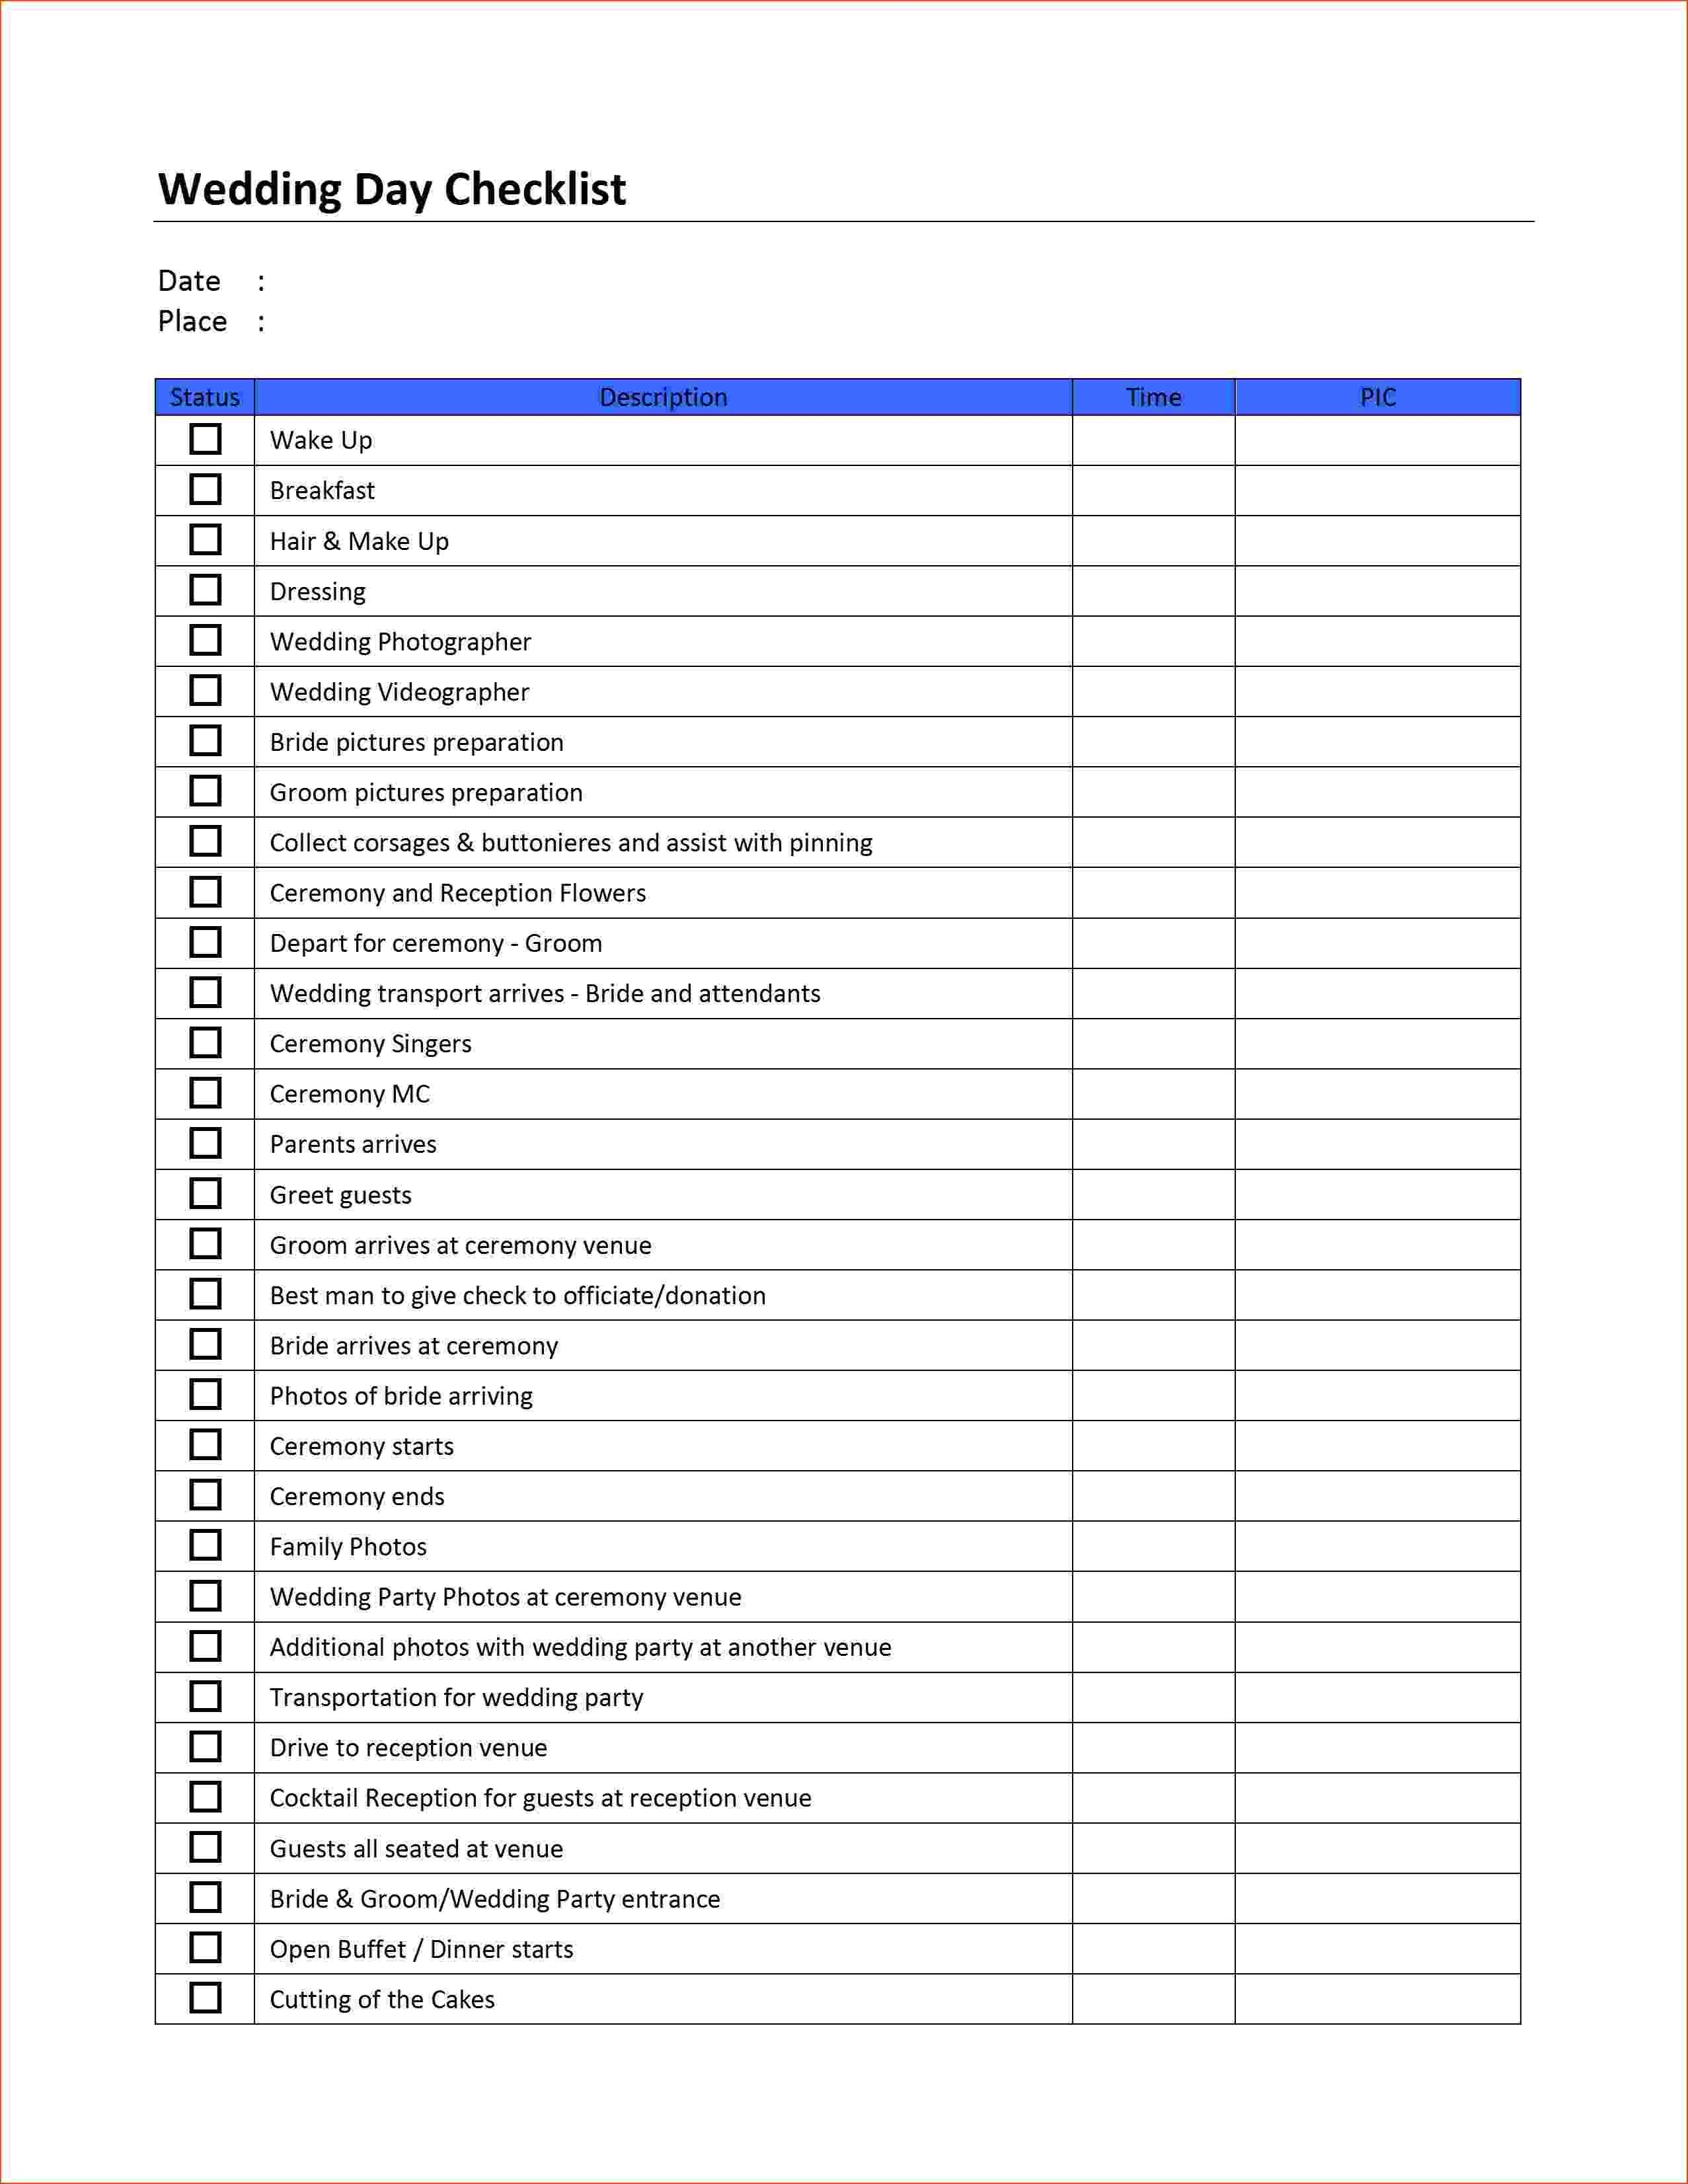 Template Microsoft Word Checklist   Savethemdctrails.org Pertaining To Baseball Card Checklist Spreadsheet